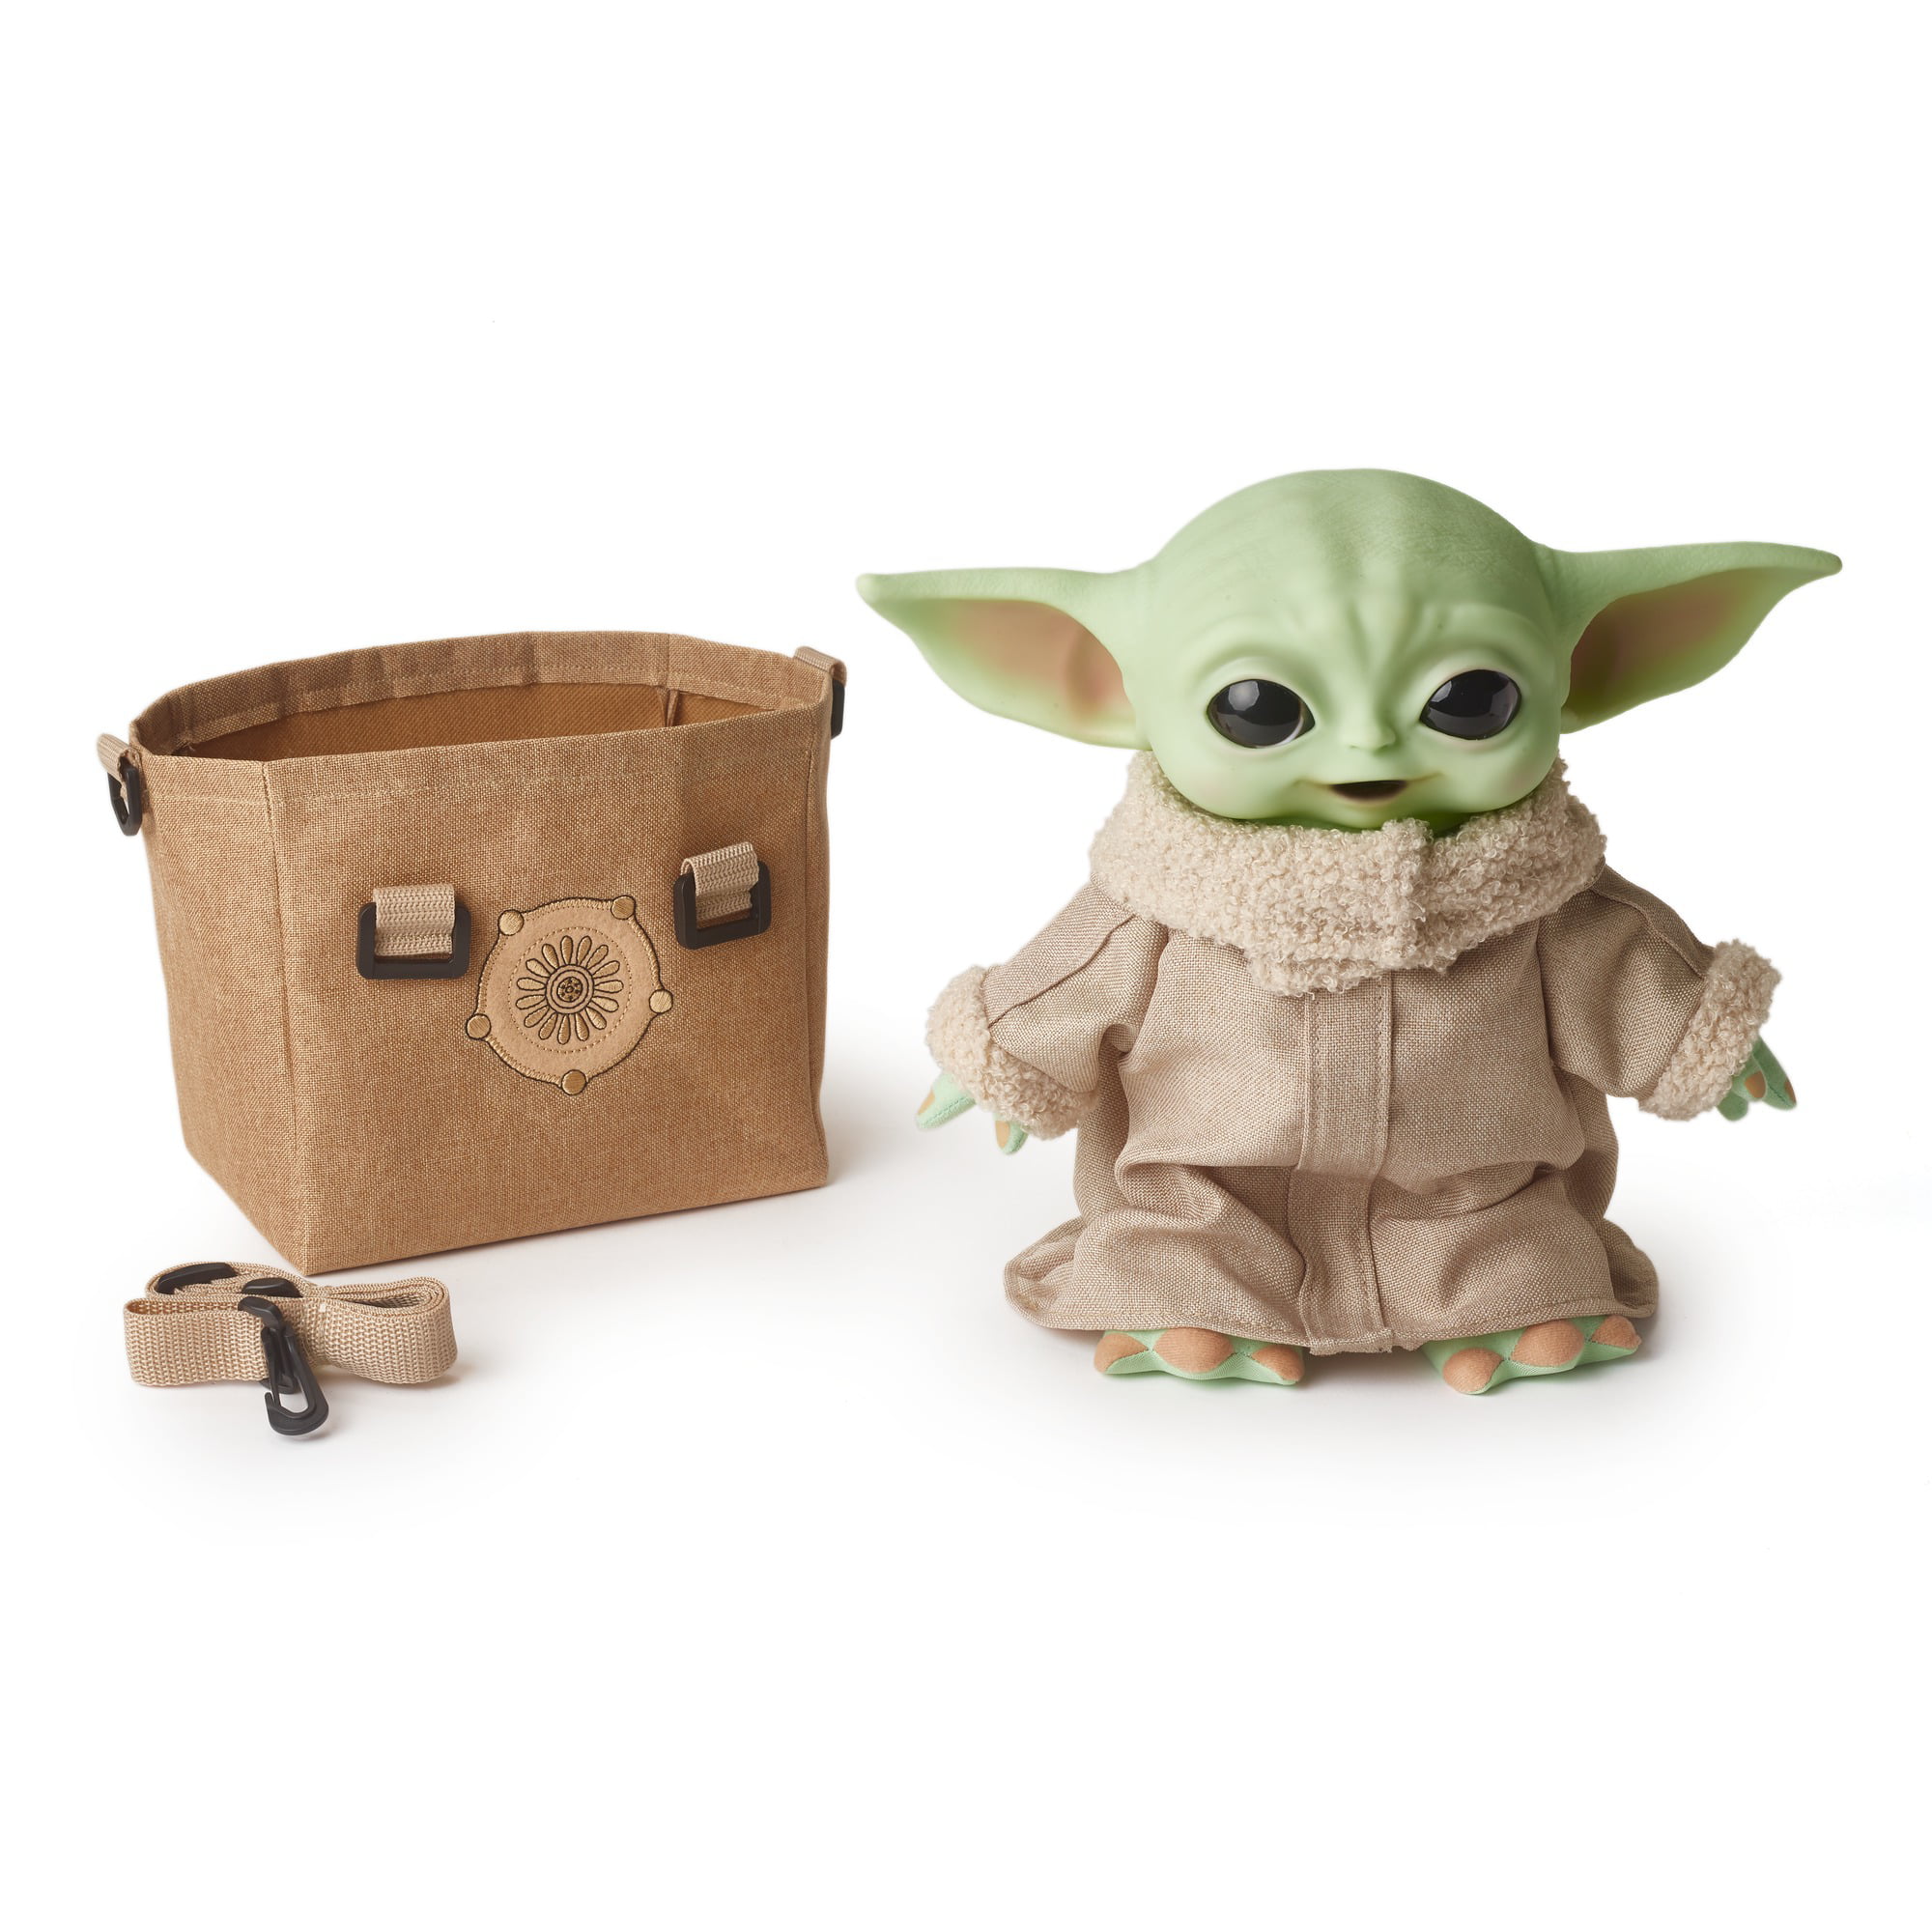 Star Wars Baby Yoda 8 inch Plush The Mandalorian The Child NEW w TAGS 